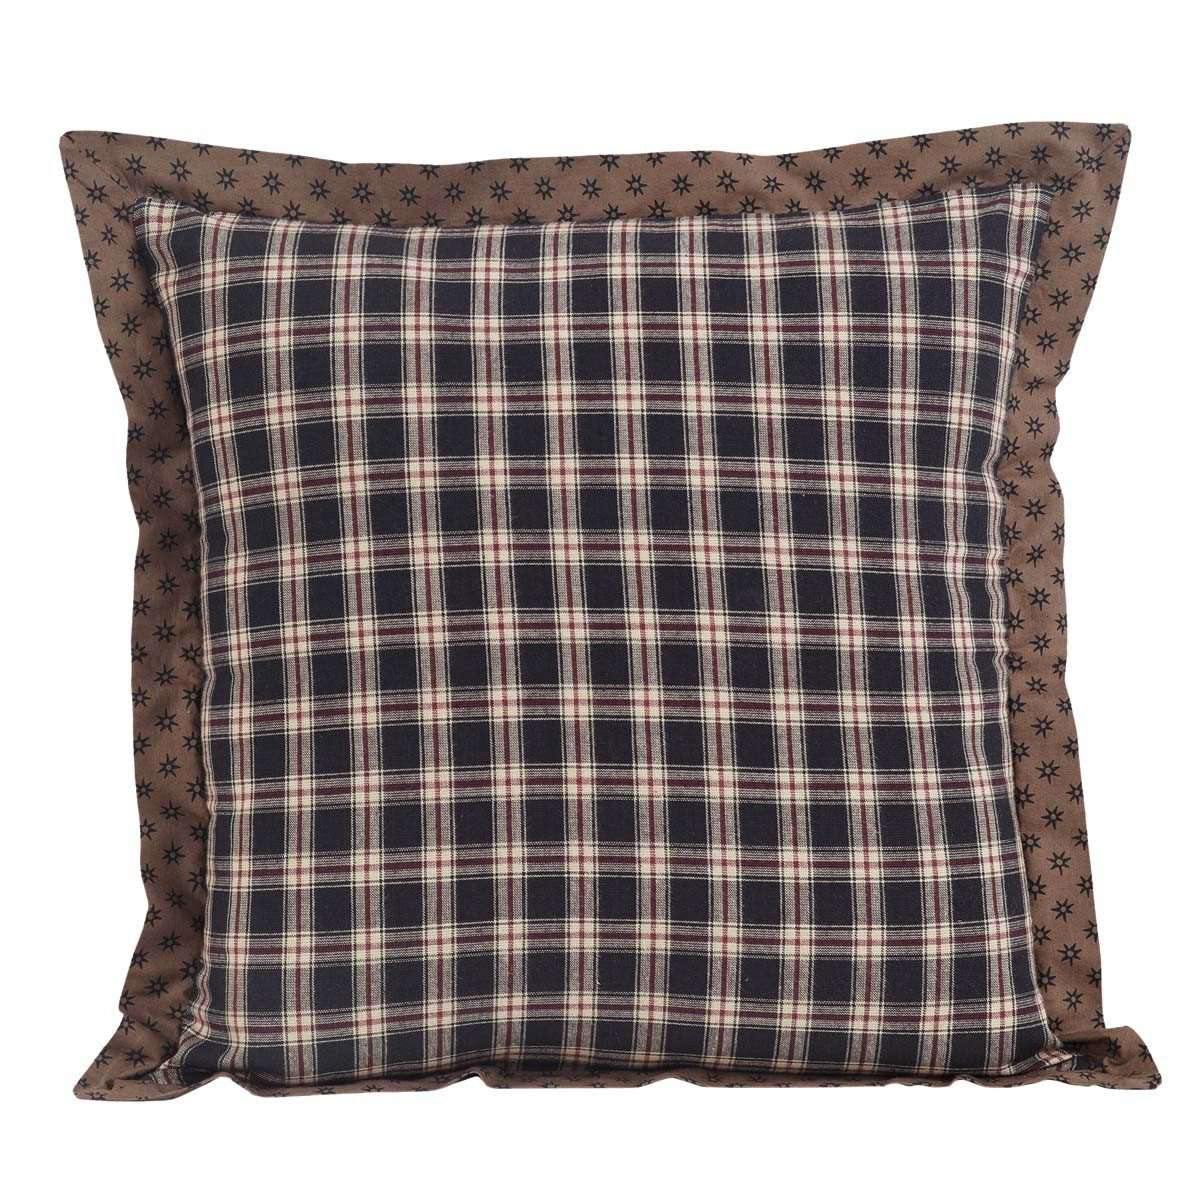 Bingham Star Pillow Fabric 16x16 front